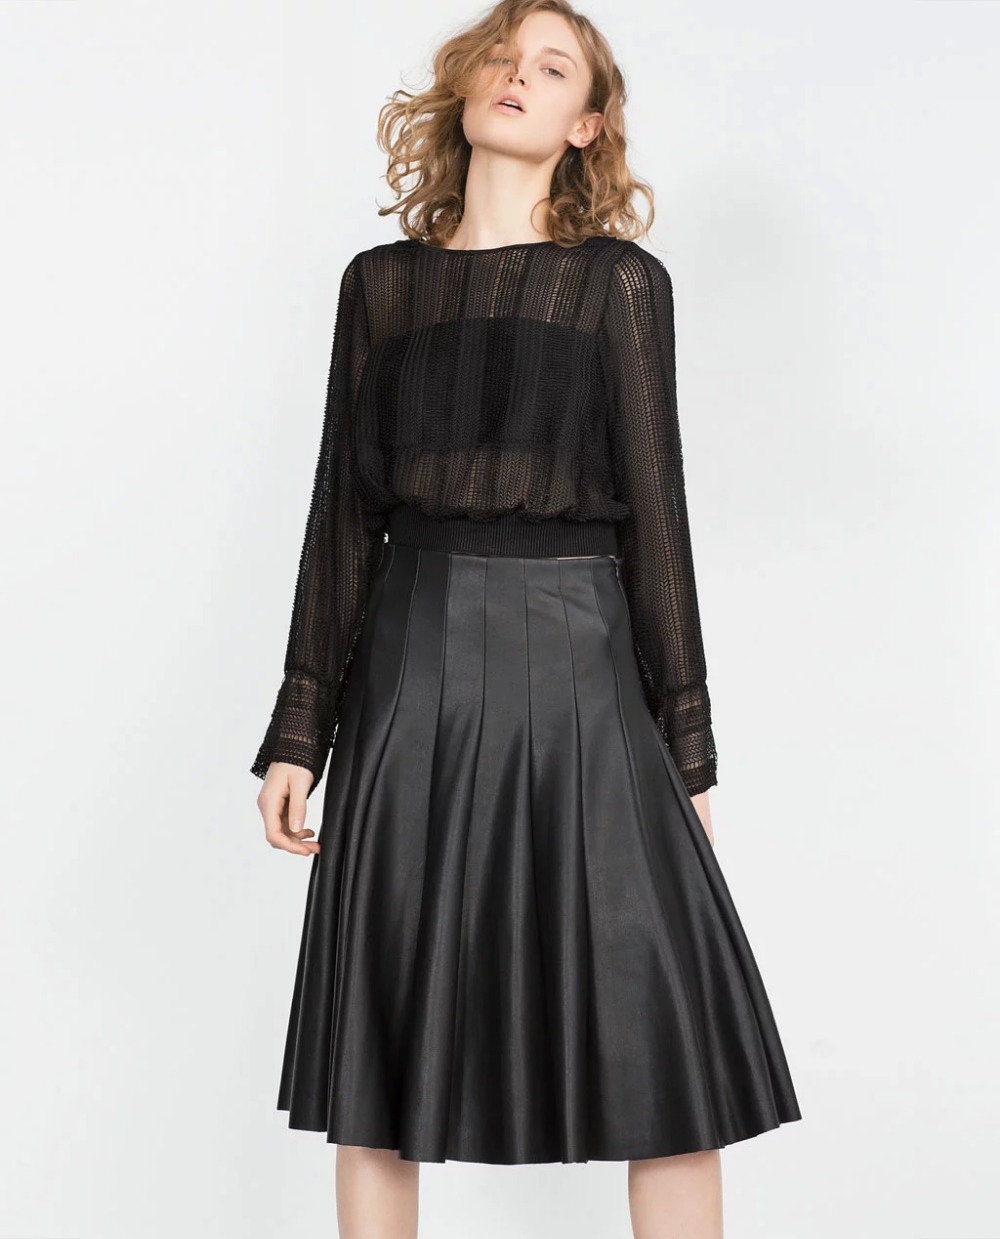 European Fashion women faux leather black Knee-Length Pleated skirts vintage high waist side zipper casual brand female